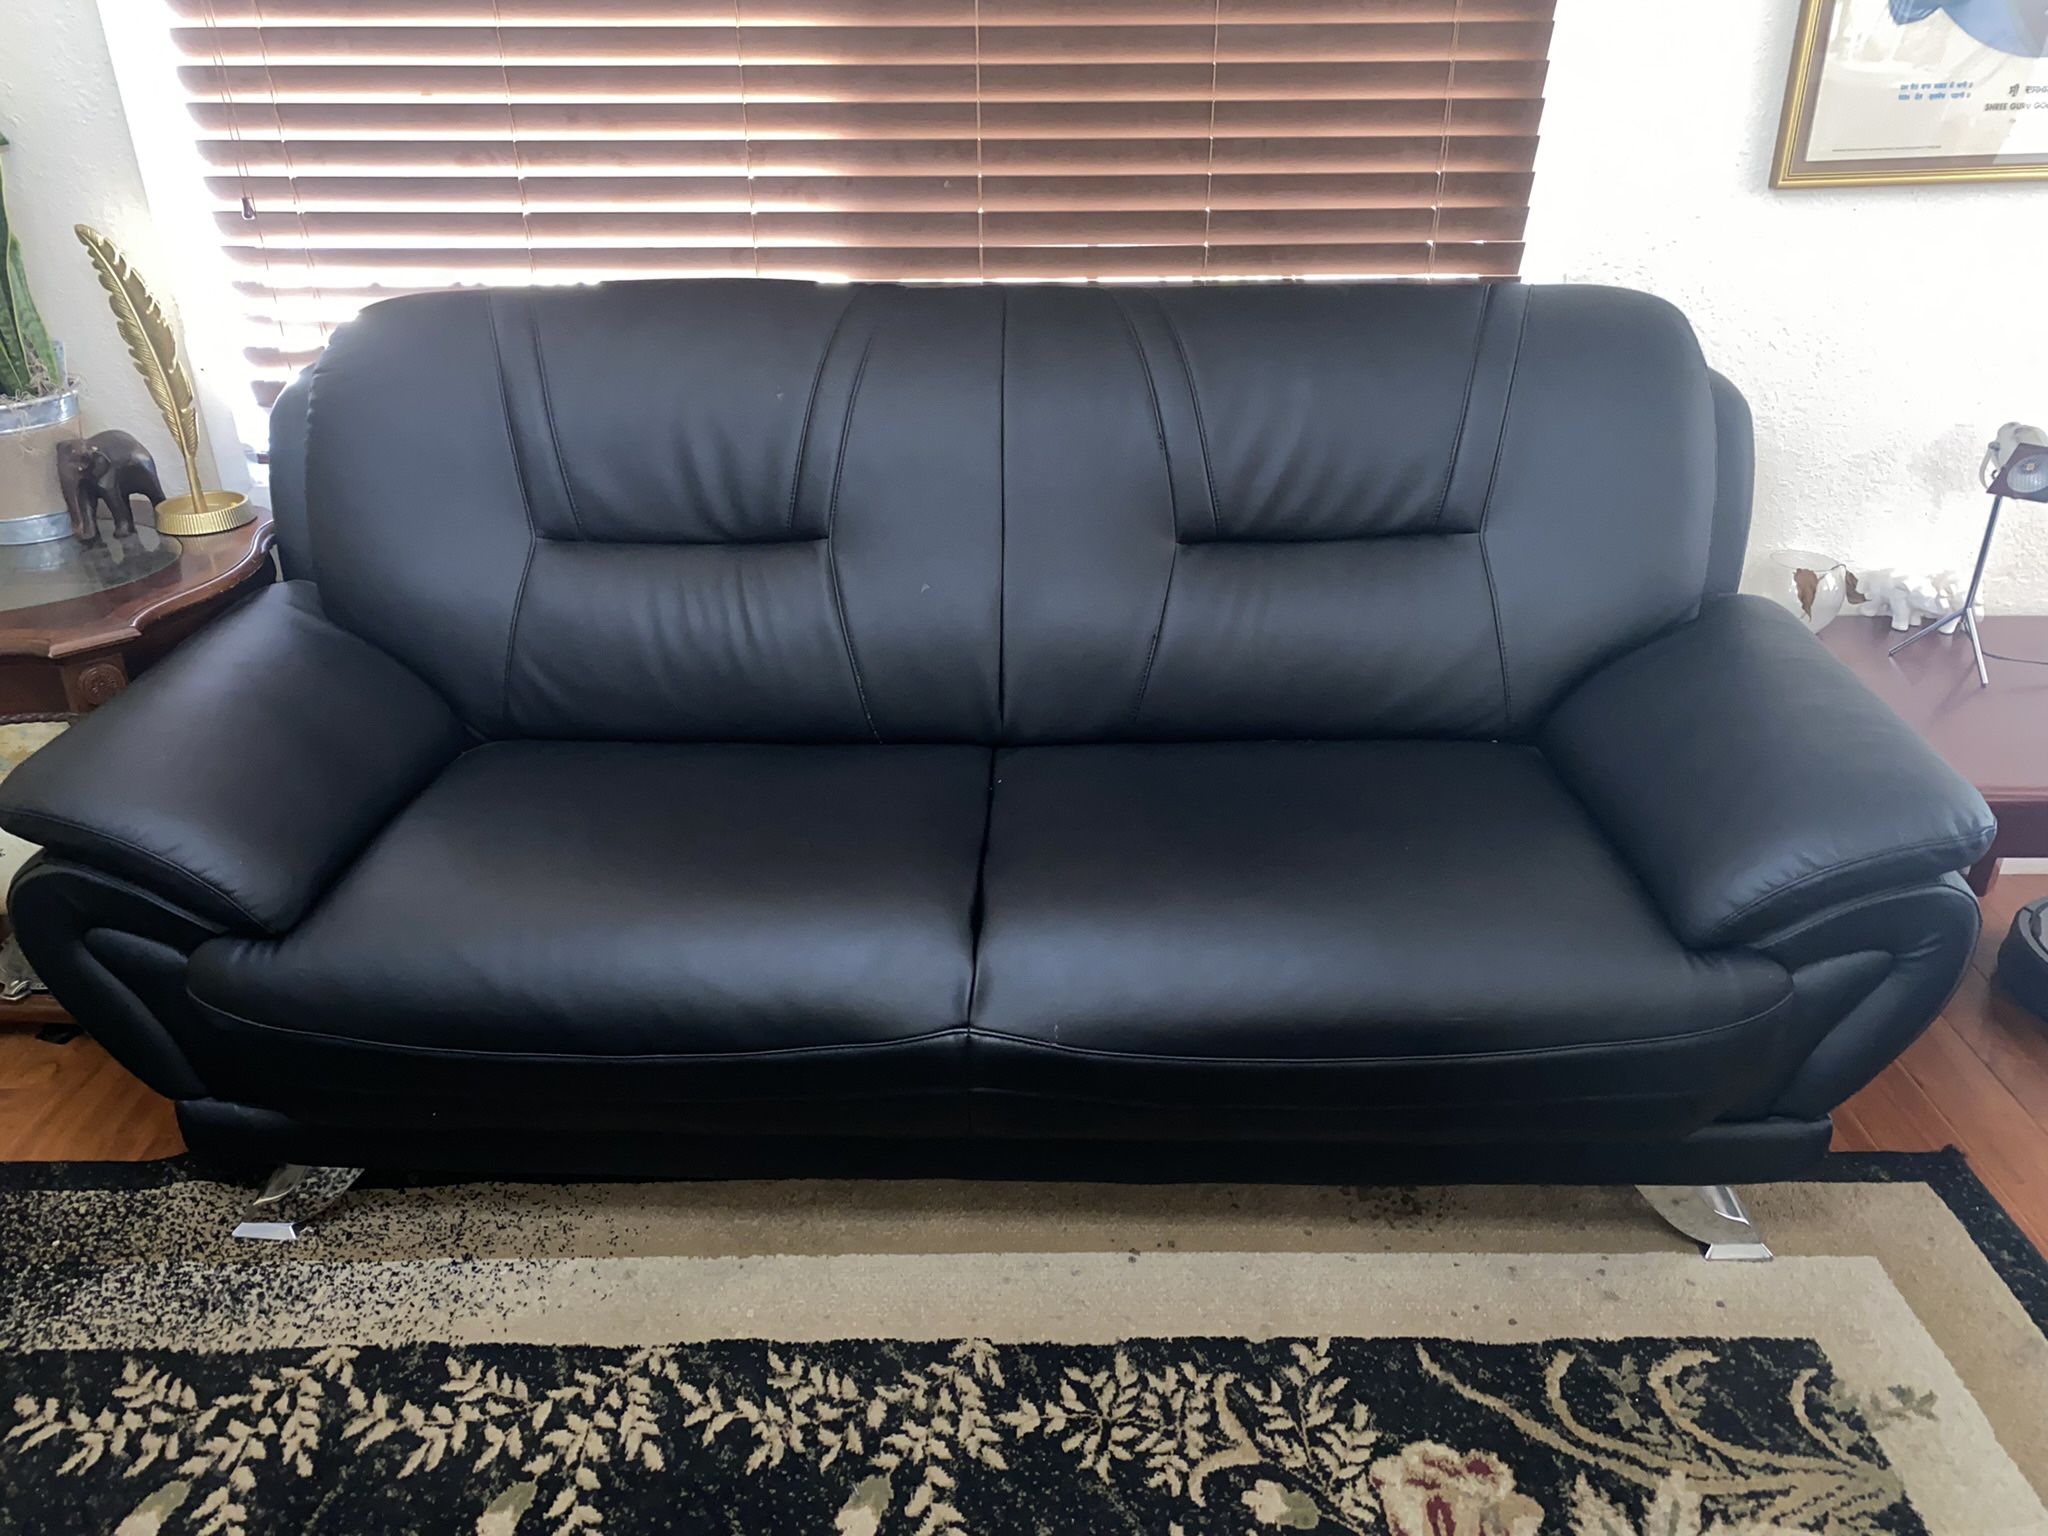 2 Piece Black leather sofas 